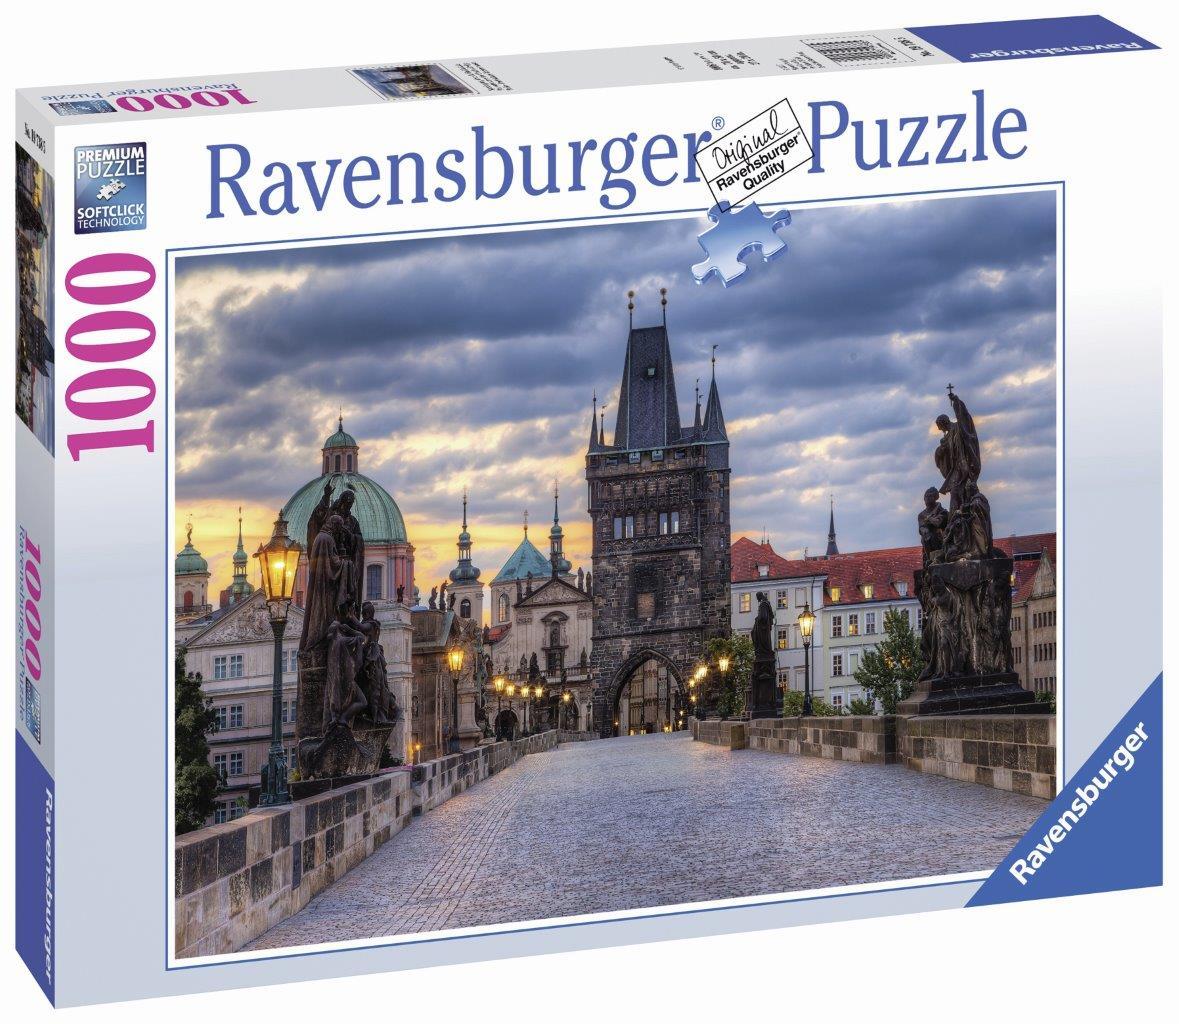 Across Charles Bridge At Dawn Puzzle 1000pc (Ravensburger Puzzle)